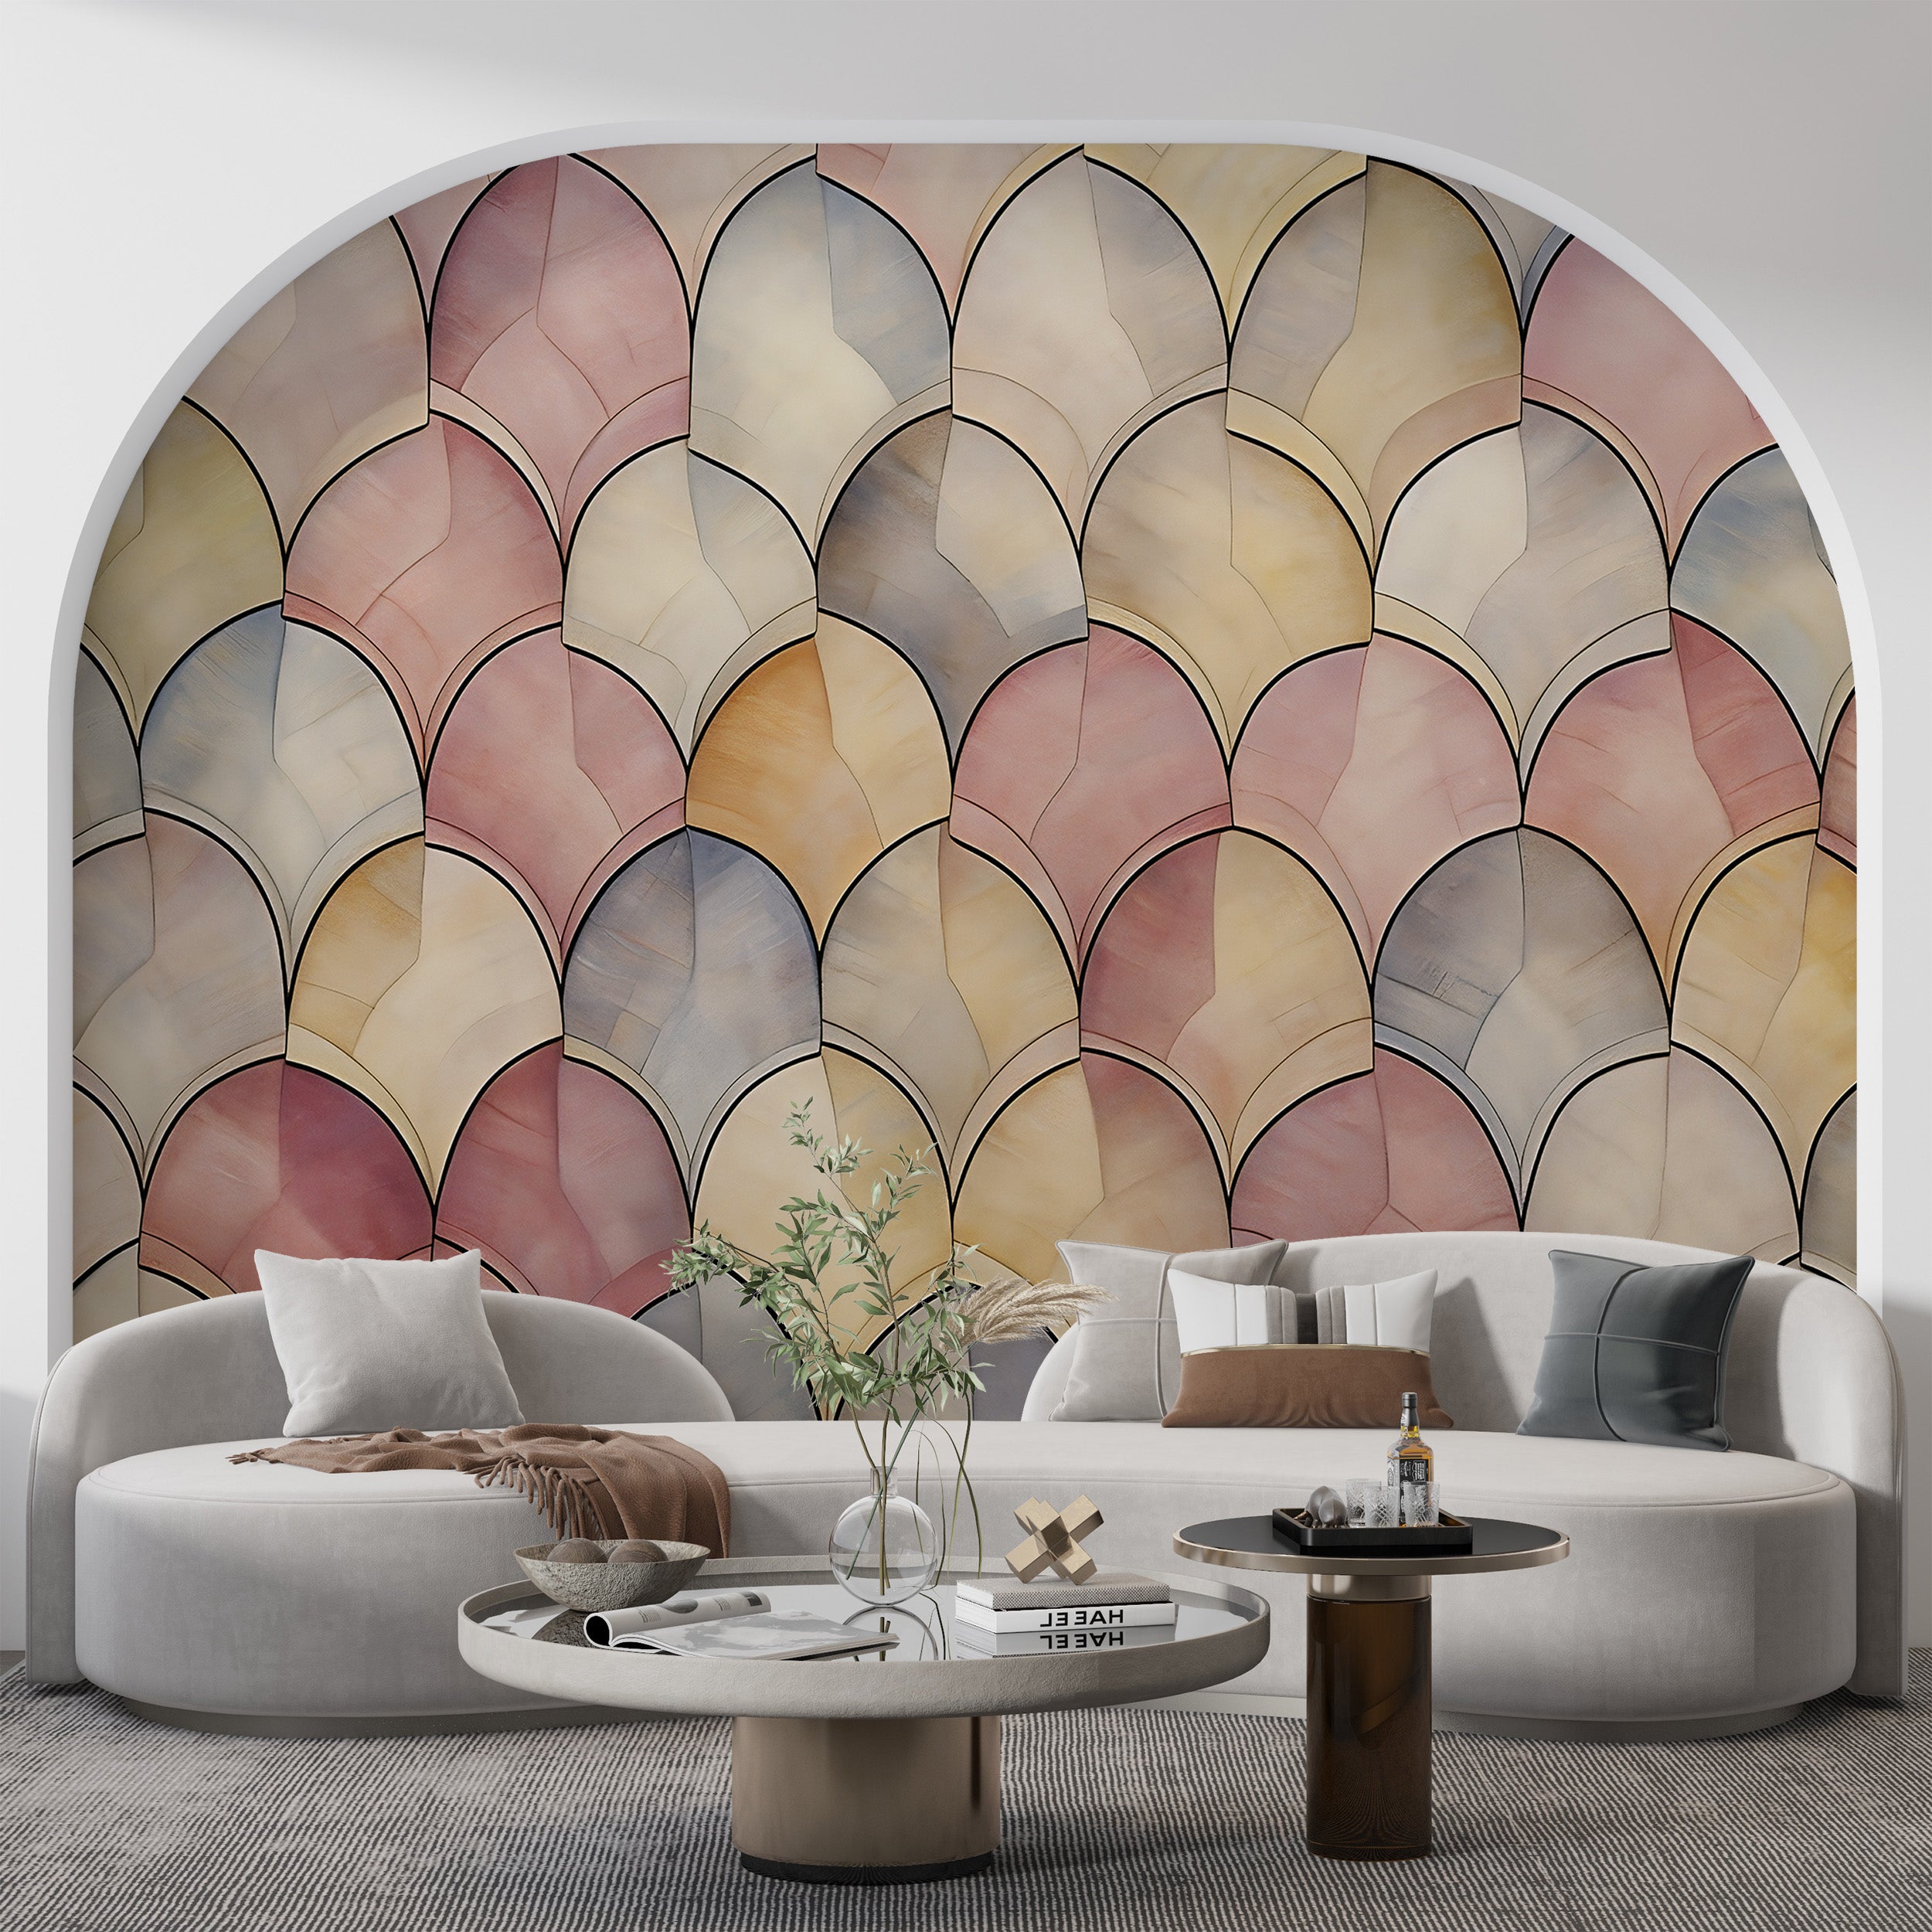 Sleek Abstract Geometry Wallpaper for Modern Decor